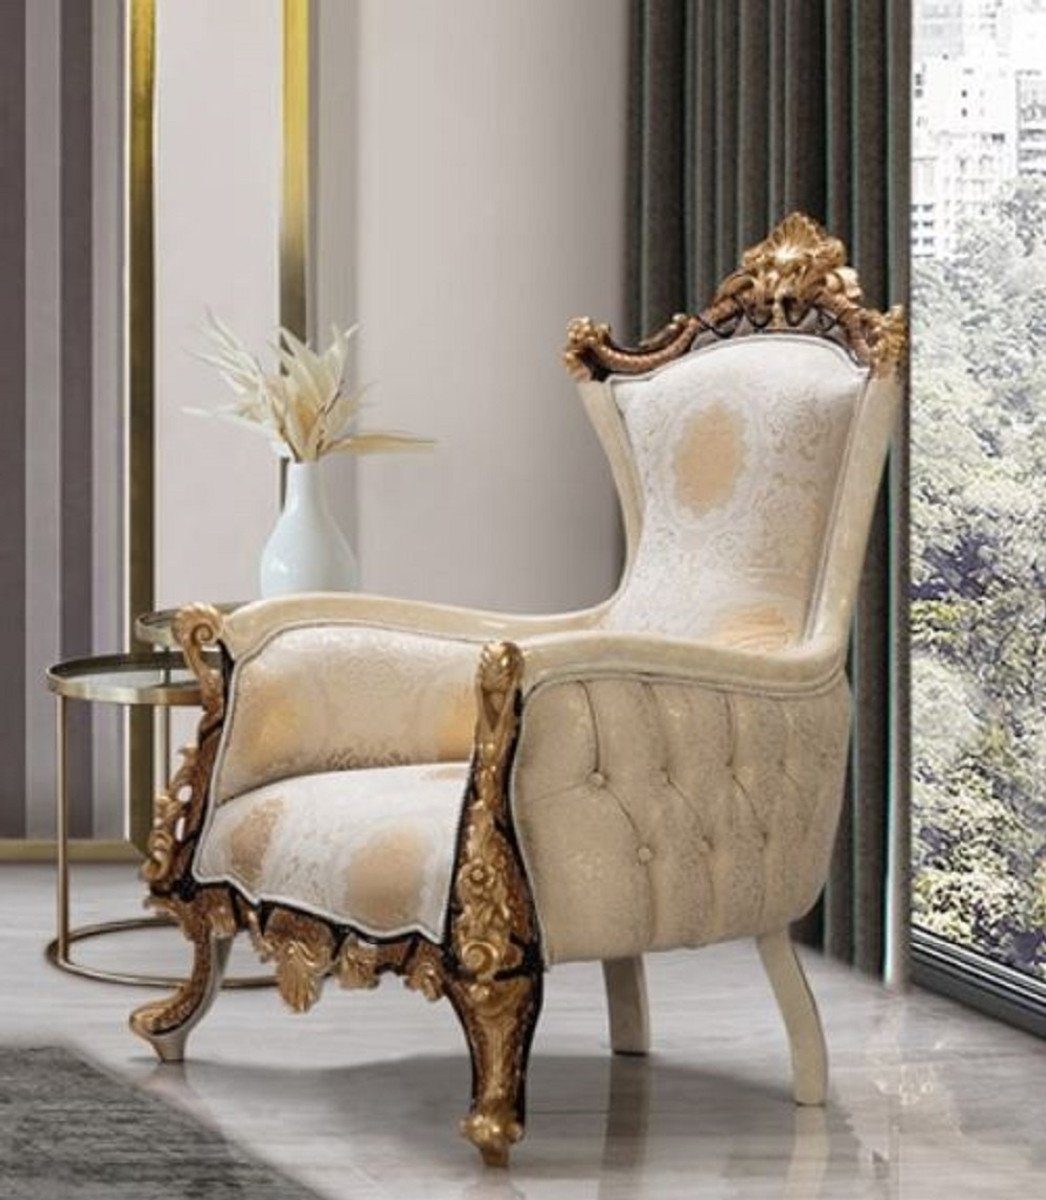 Casa Padrino Sessel Casa Padrino Luxus Barock Sessel Weiß / Beige / Creme /  Schwarz / Gold   Prunkvoller Wohnzimmer Sessel mit elegantem Muster   ...